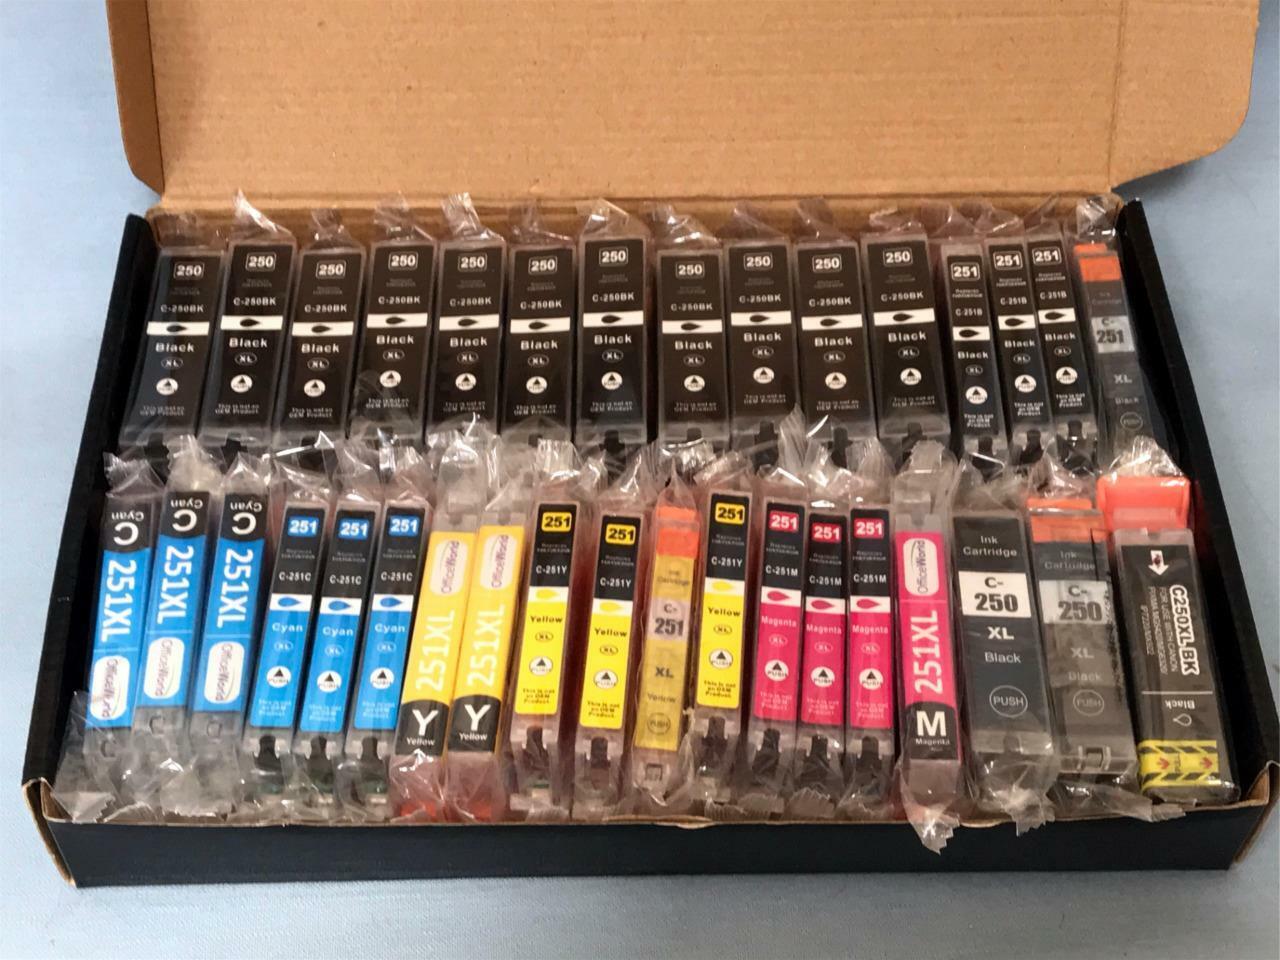 Large Lot of Inkjets ~ 250xl & 251xl ~ 34 Ink Cartridges